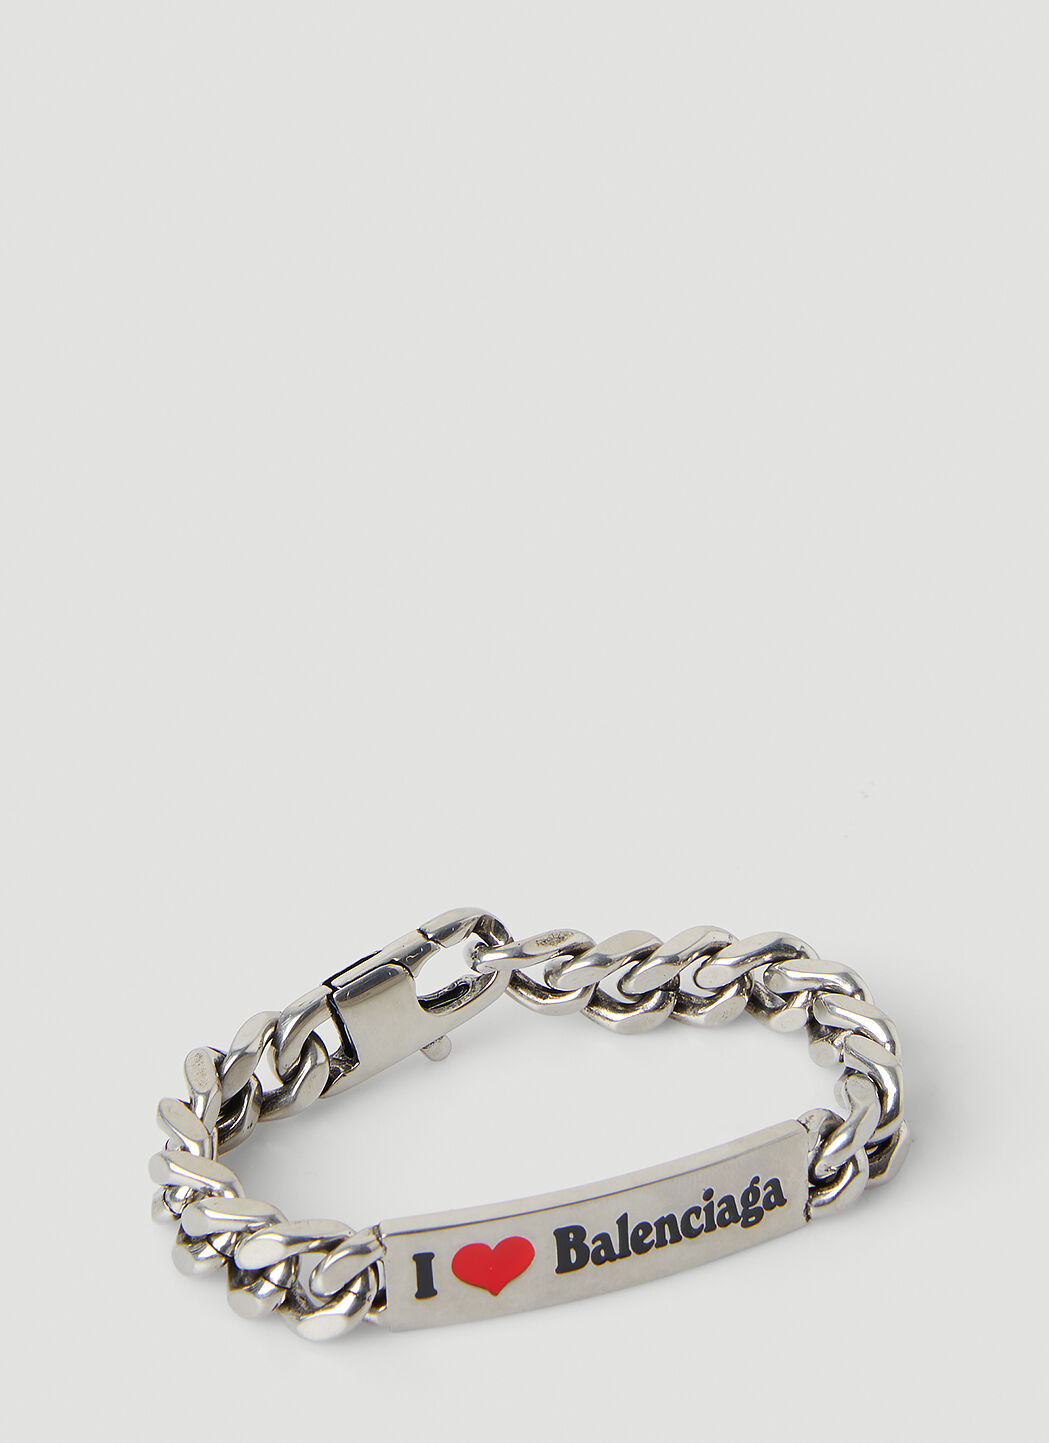 BALENCIAGA Bracelet SILVER Men's Wrist Circumference 15 | eBay